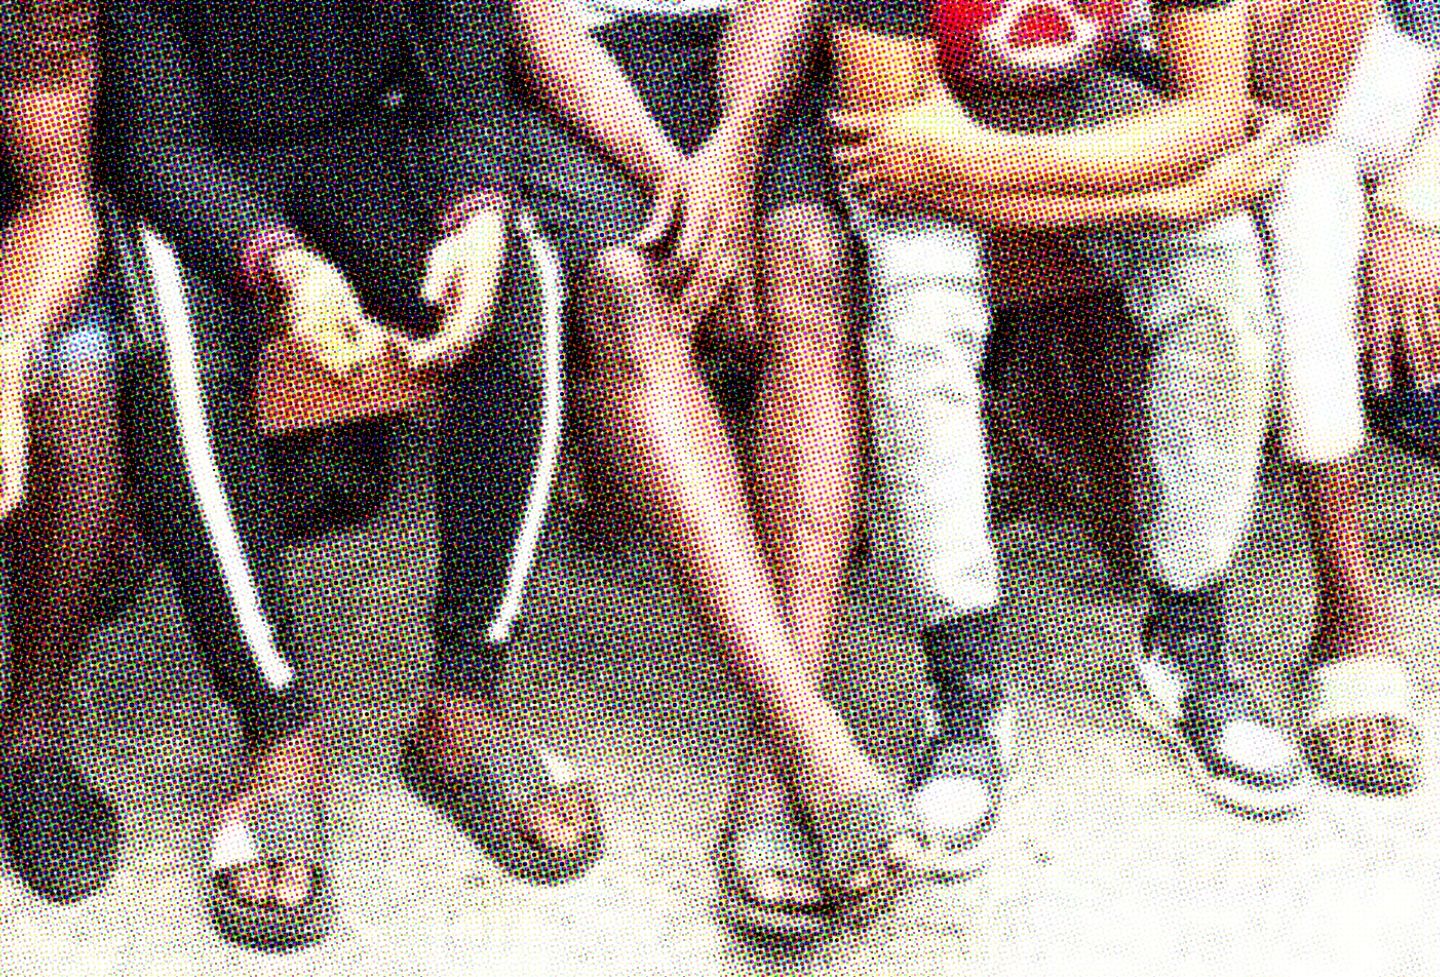 Arrested Nigerian men